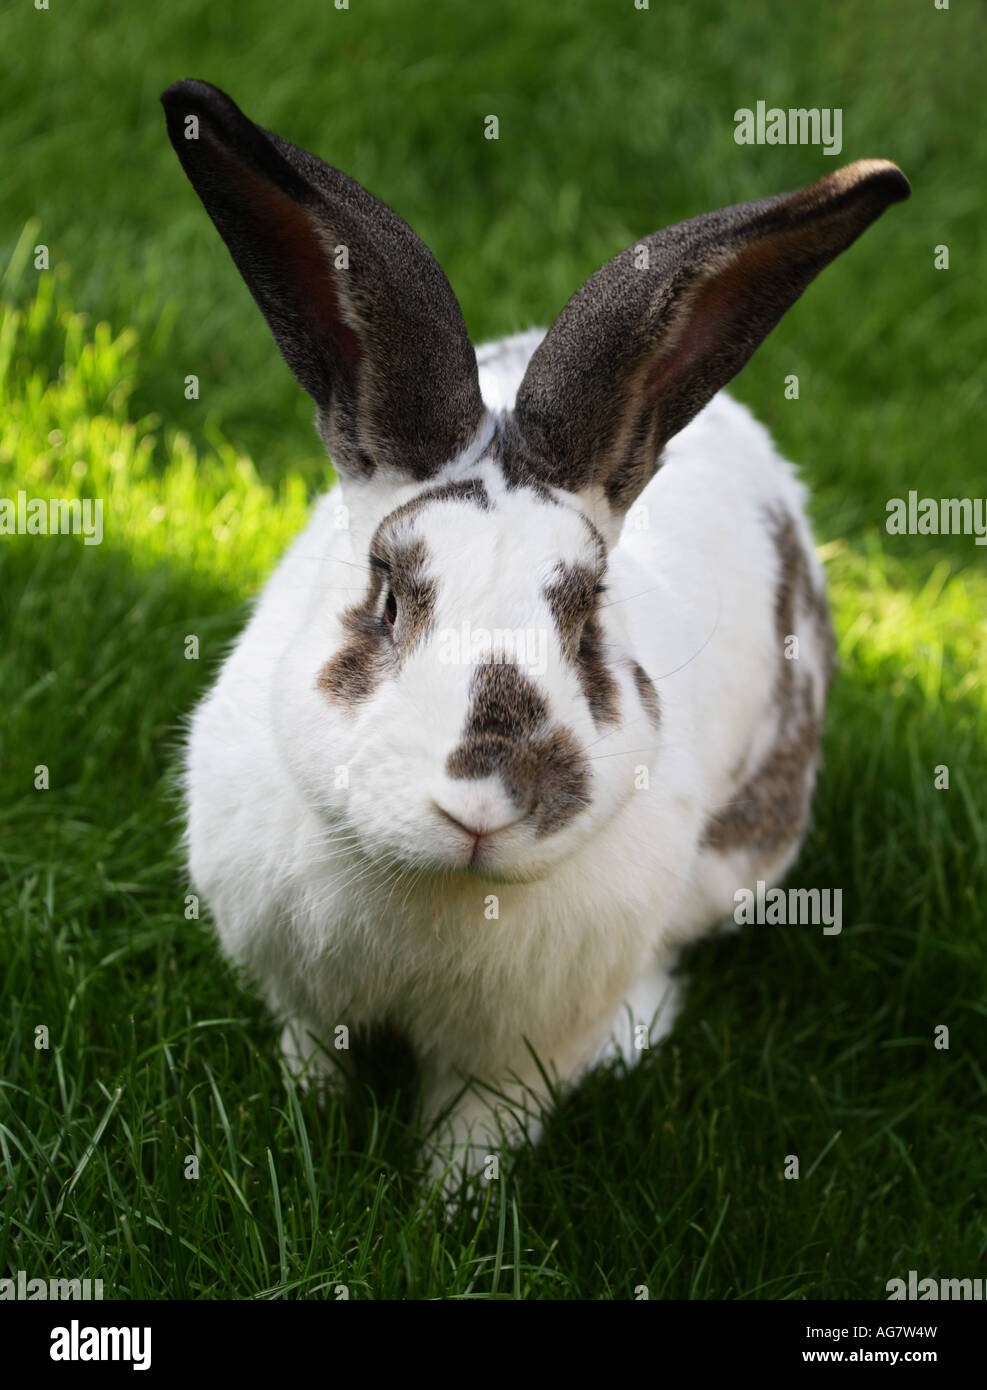 British Giant rabbit sitting on grass in lawn Stock Photo